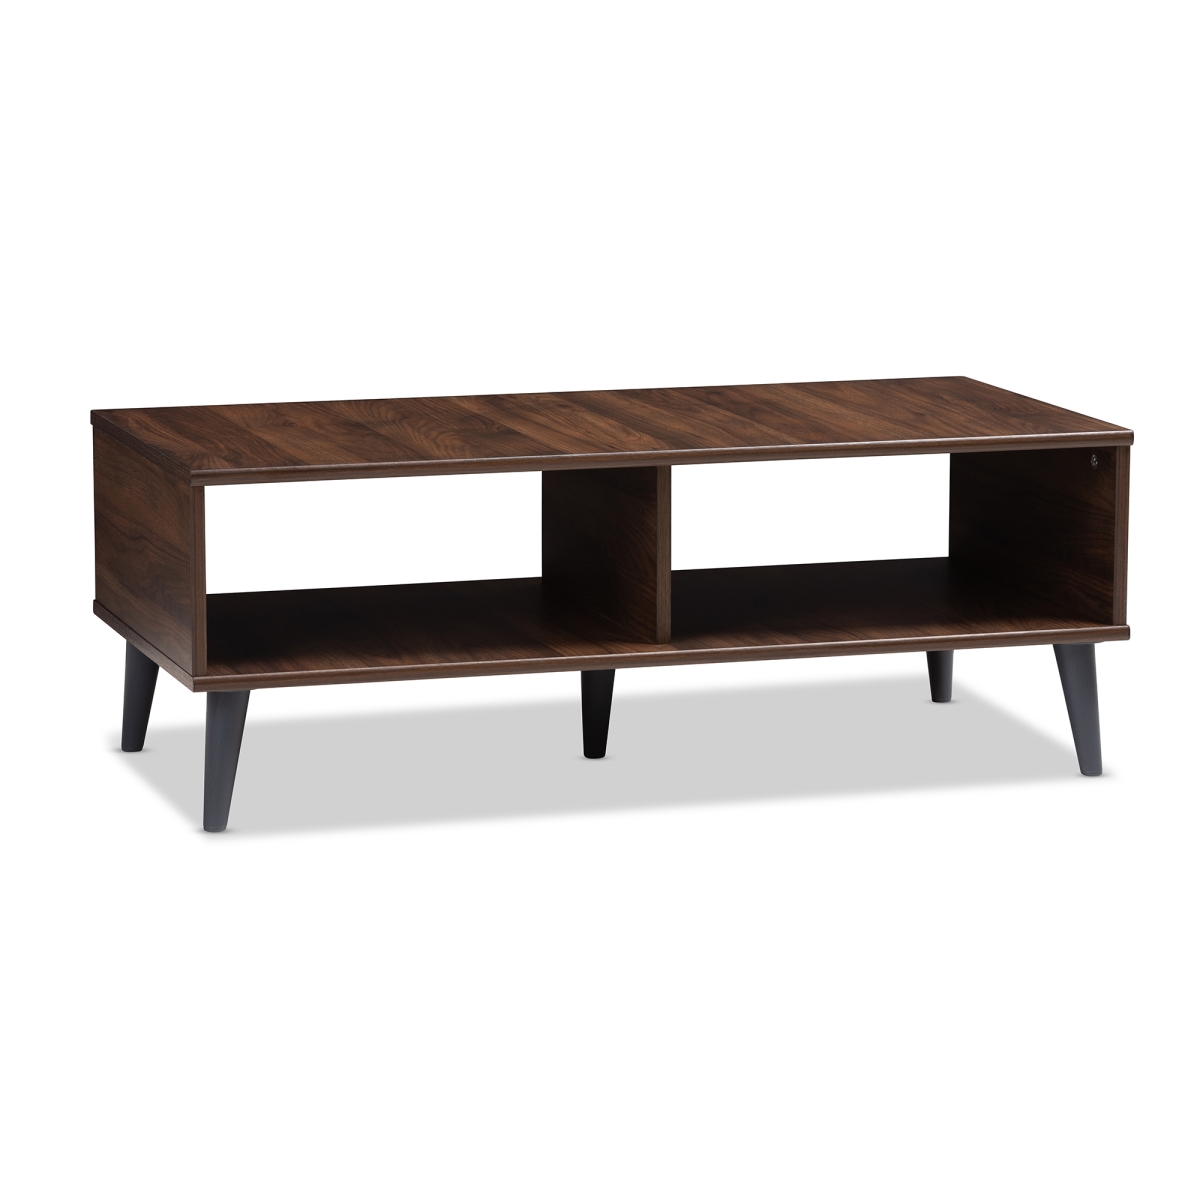 Urban Designs 370169 Sterling Wooden Coffee Table - Walnut Brown & Dark Grey - 7.48 X 18.82 X 18.9 In.